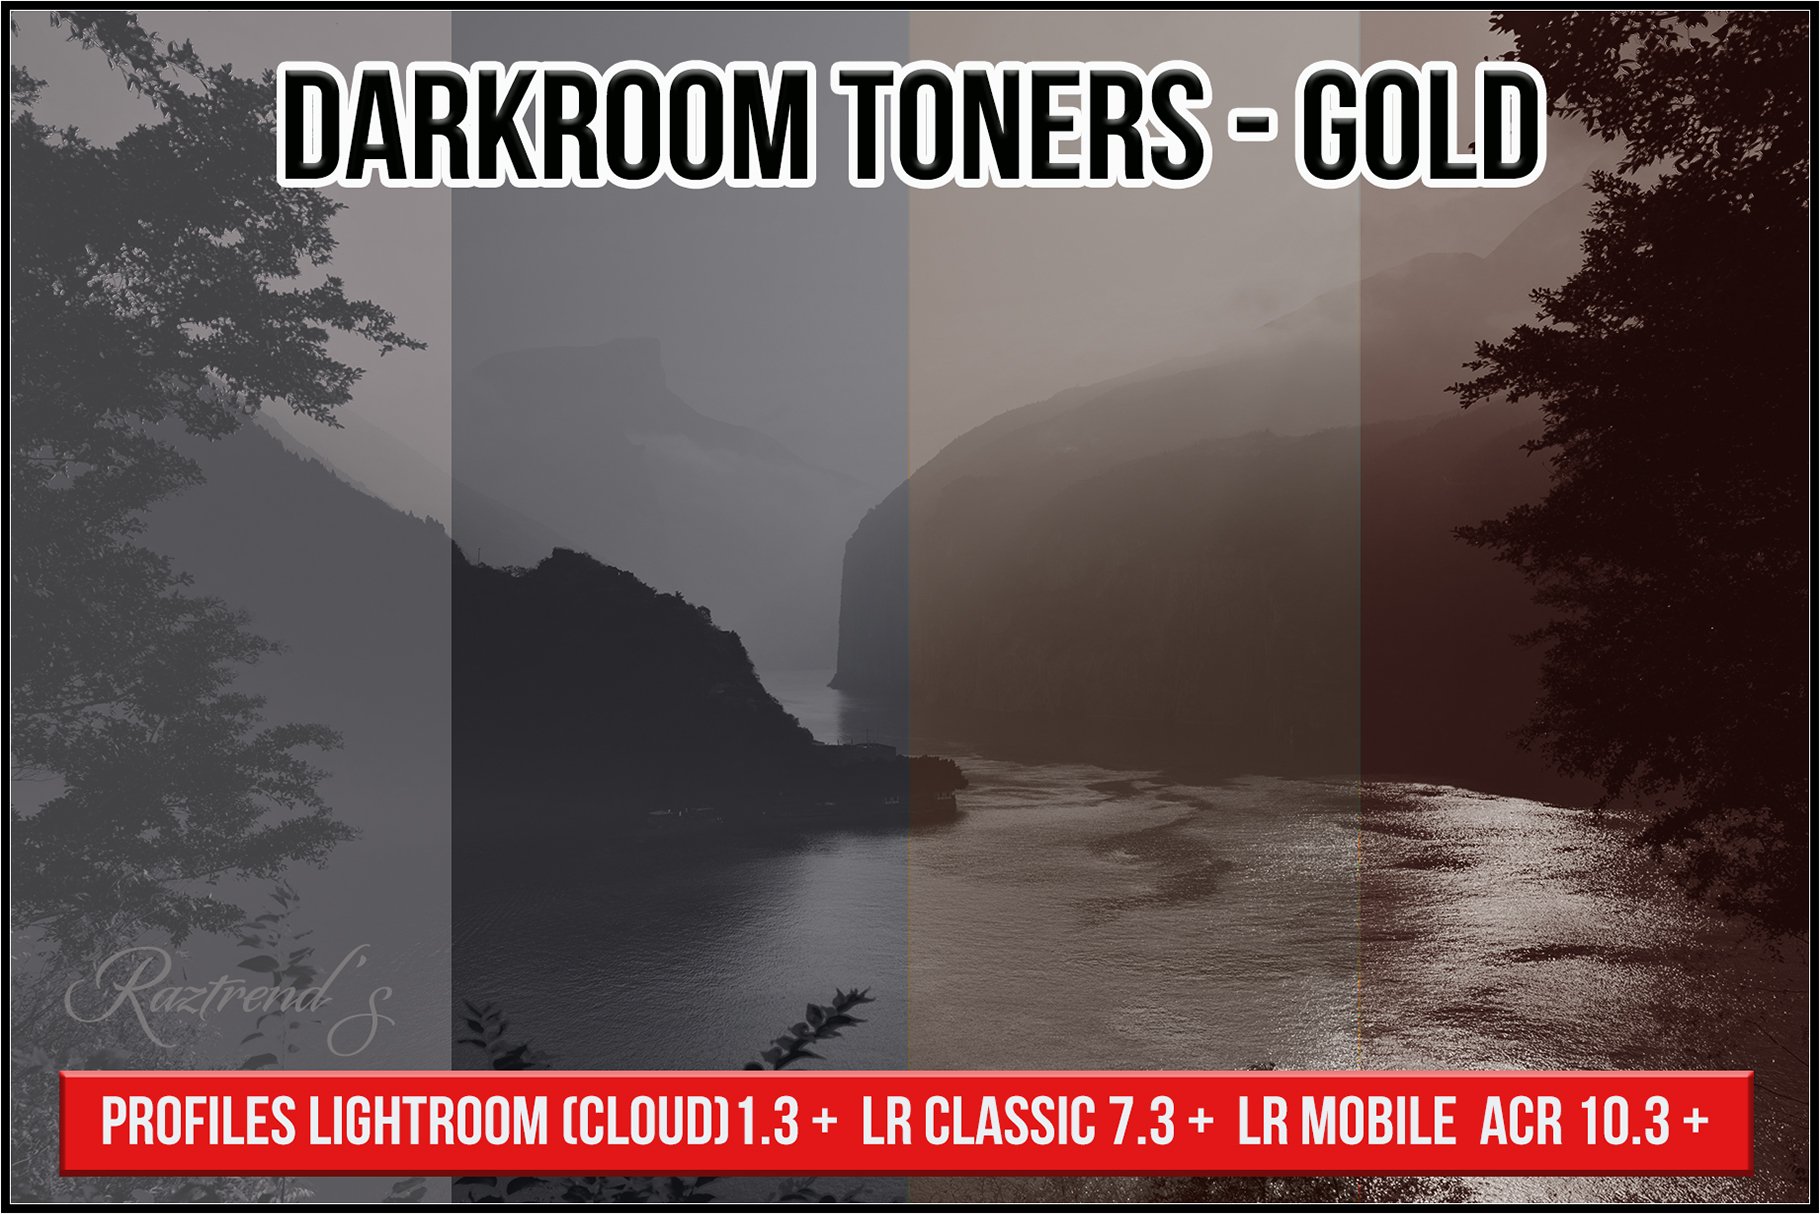 Darkroom Toners - Gold Profilescover image.